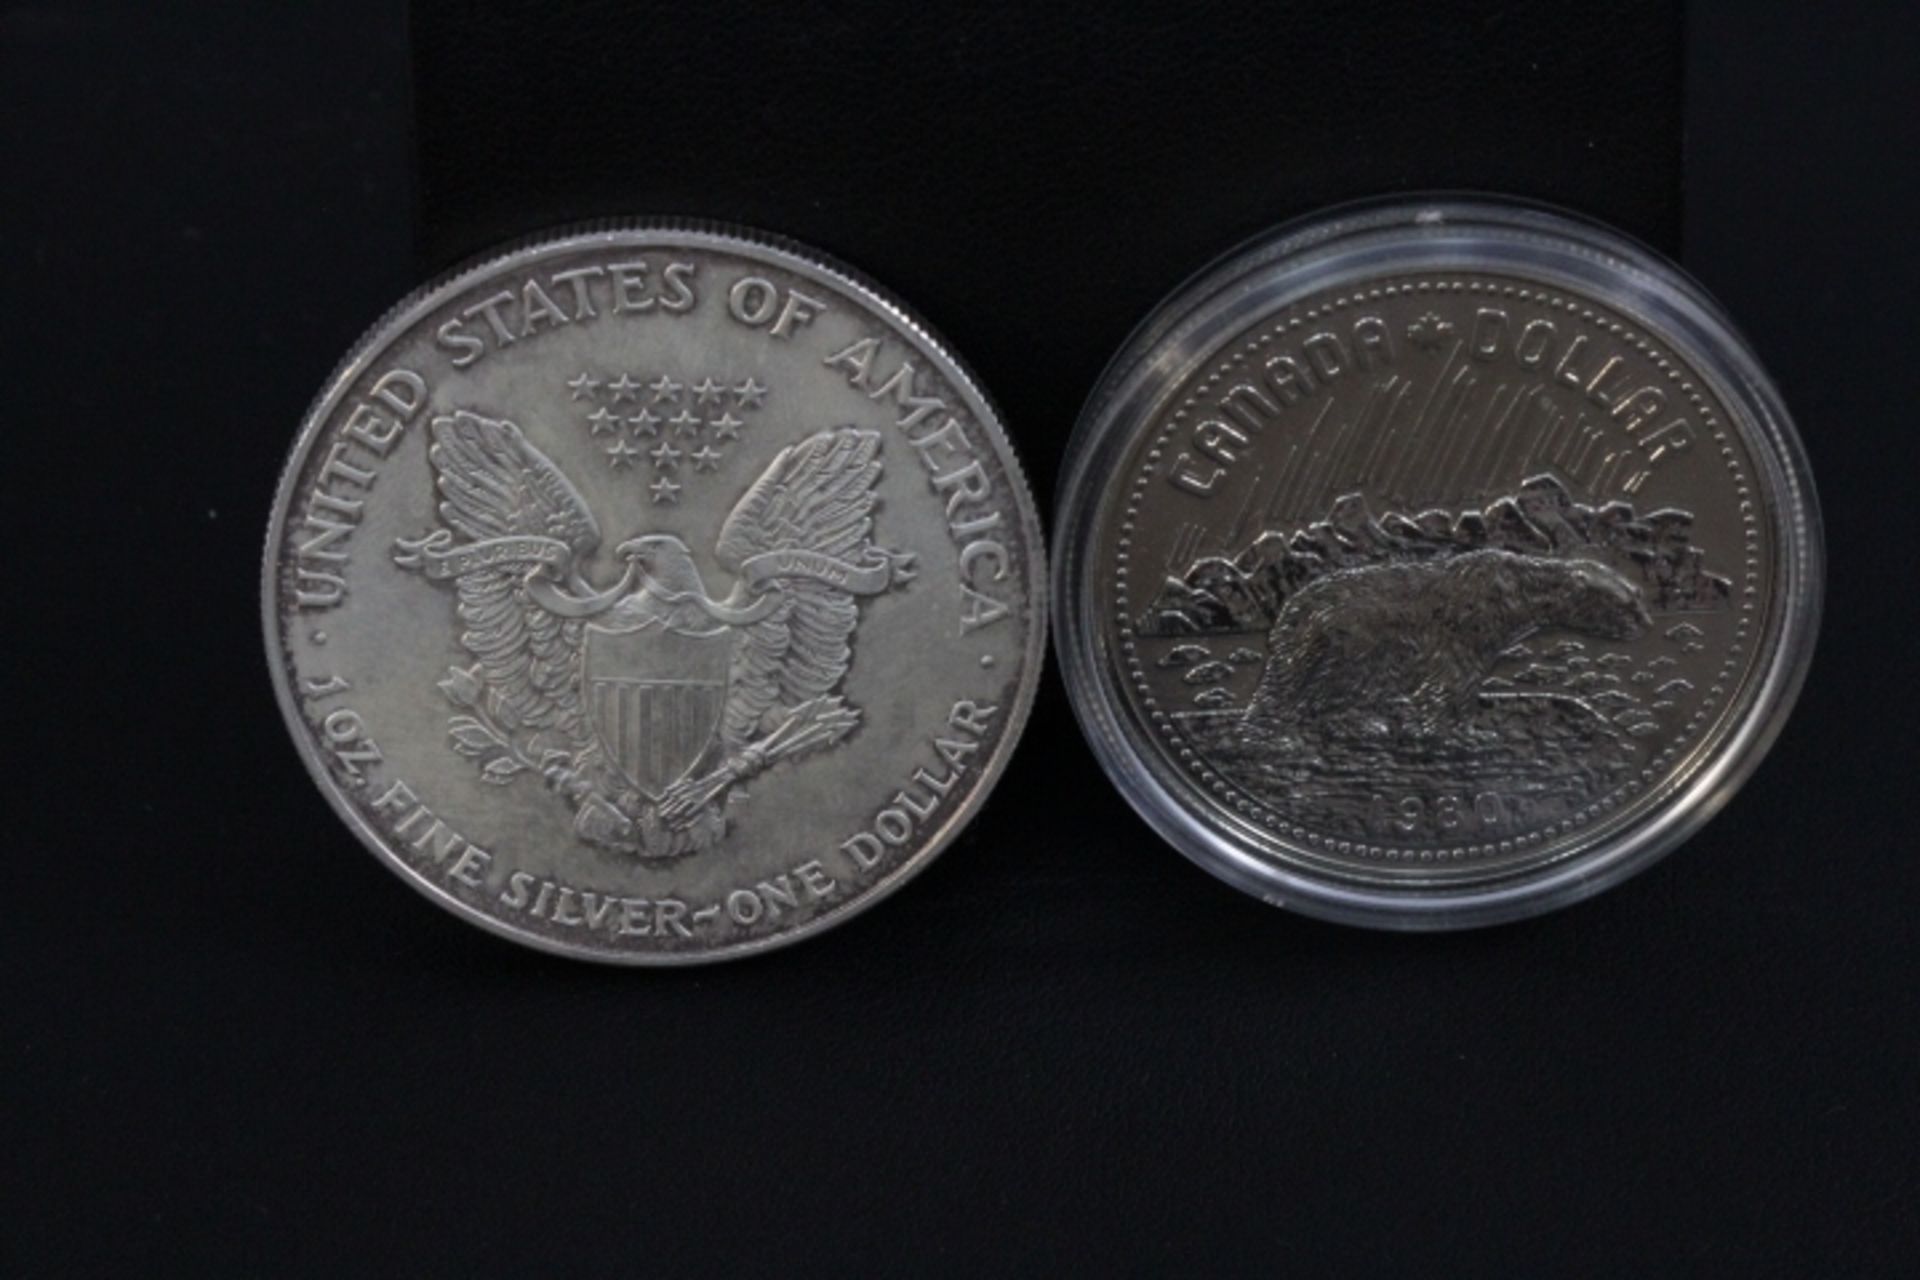 2 Silbermünzen